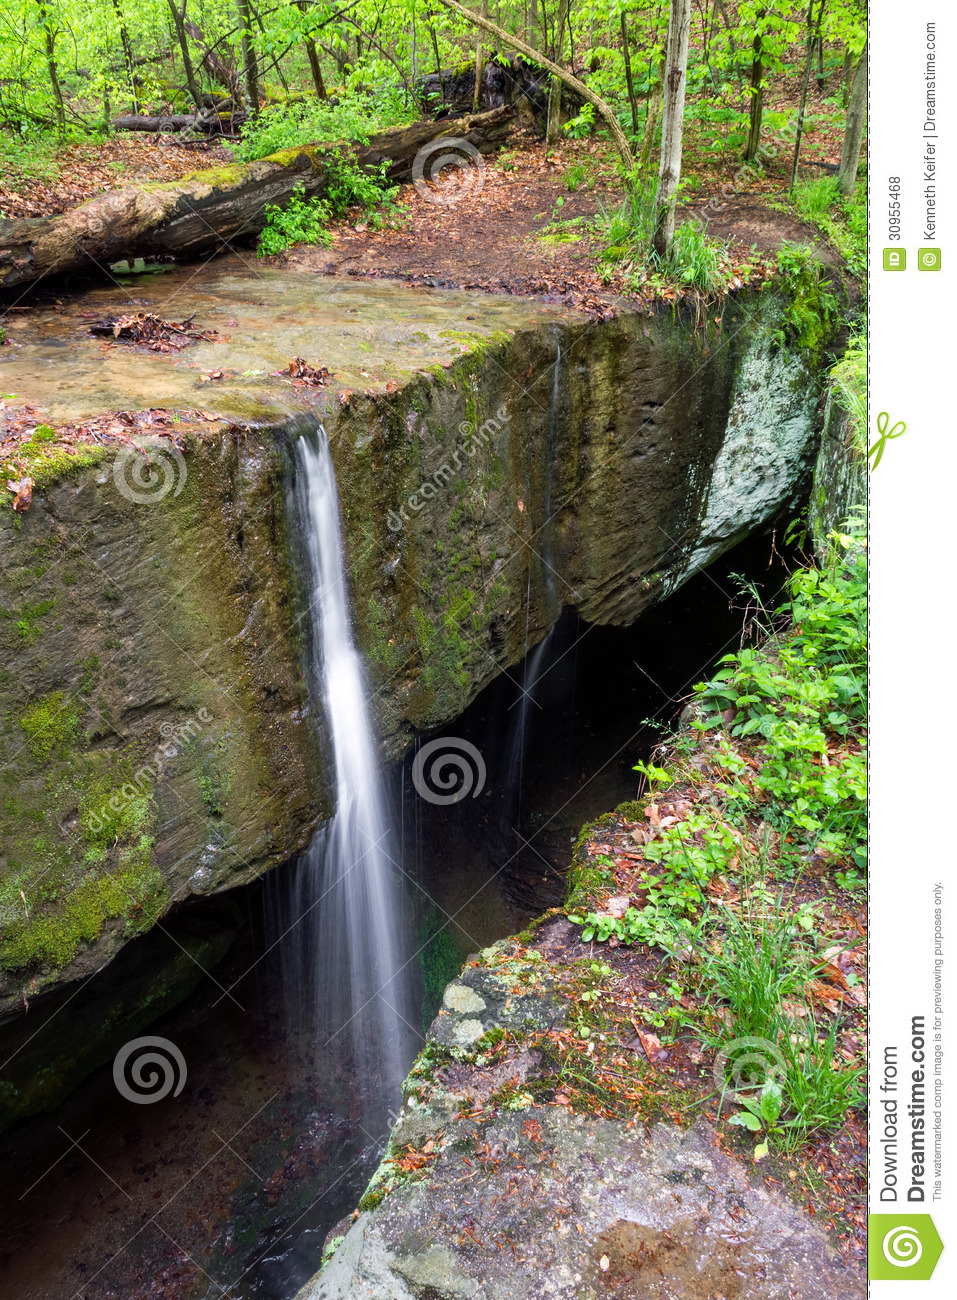 Water Pours Over A Rock Ledge At Rockbridge Nature Preserve In Ohio S